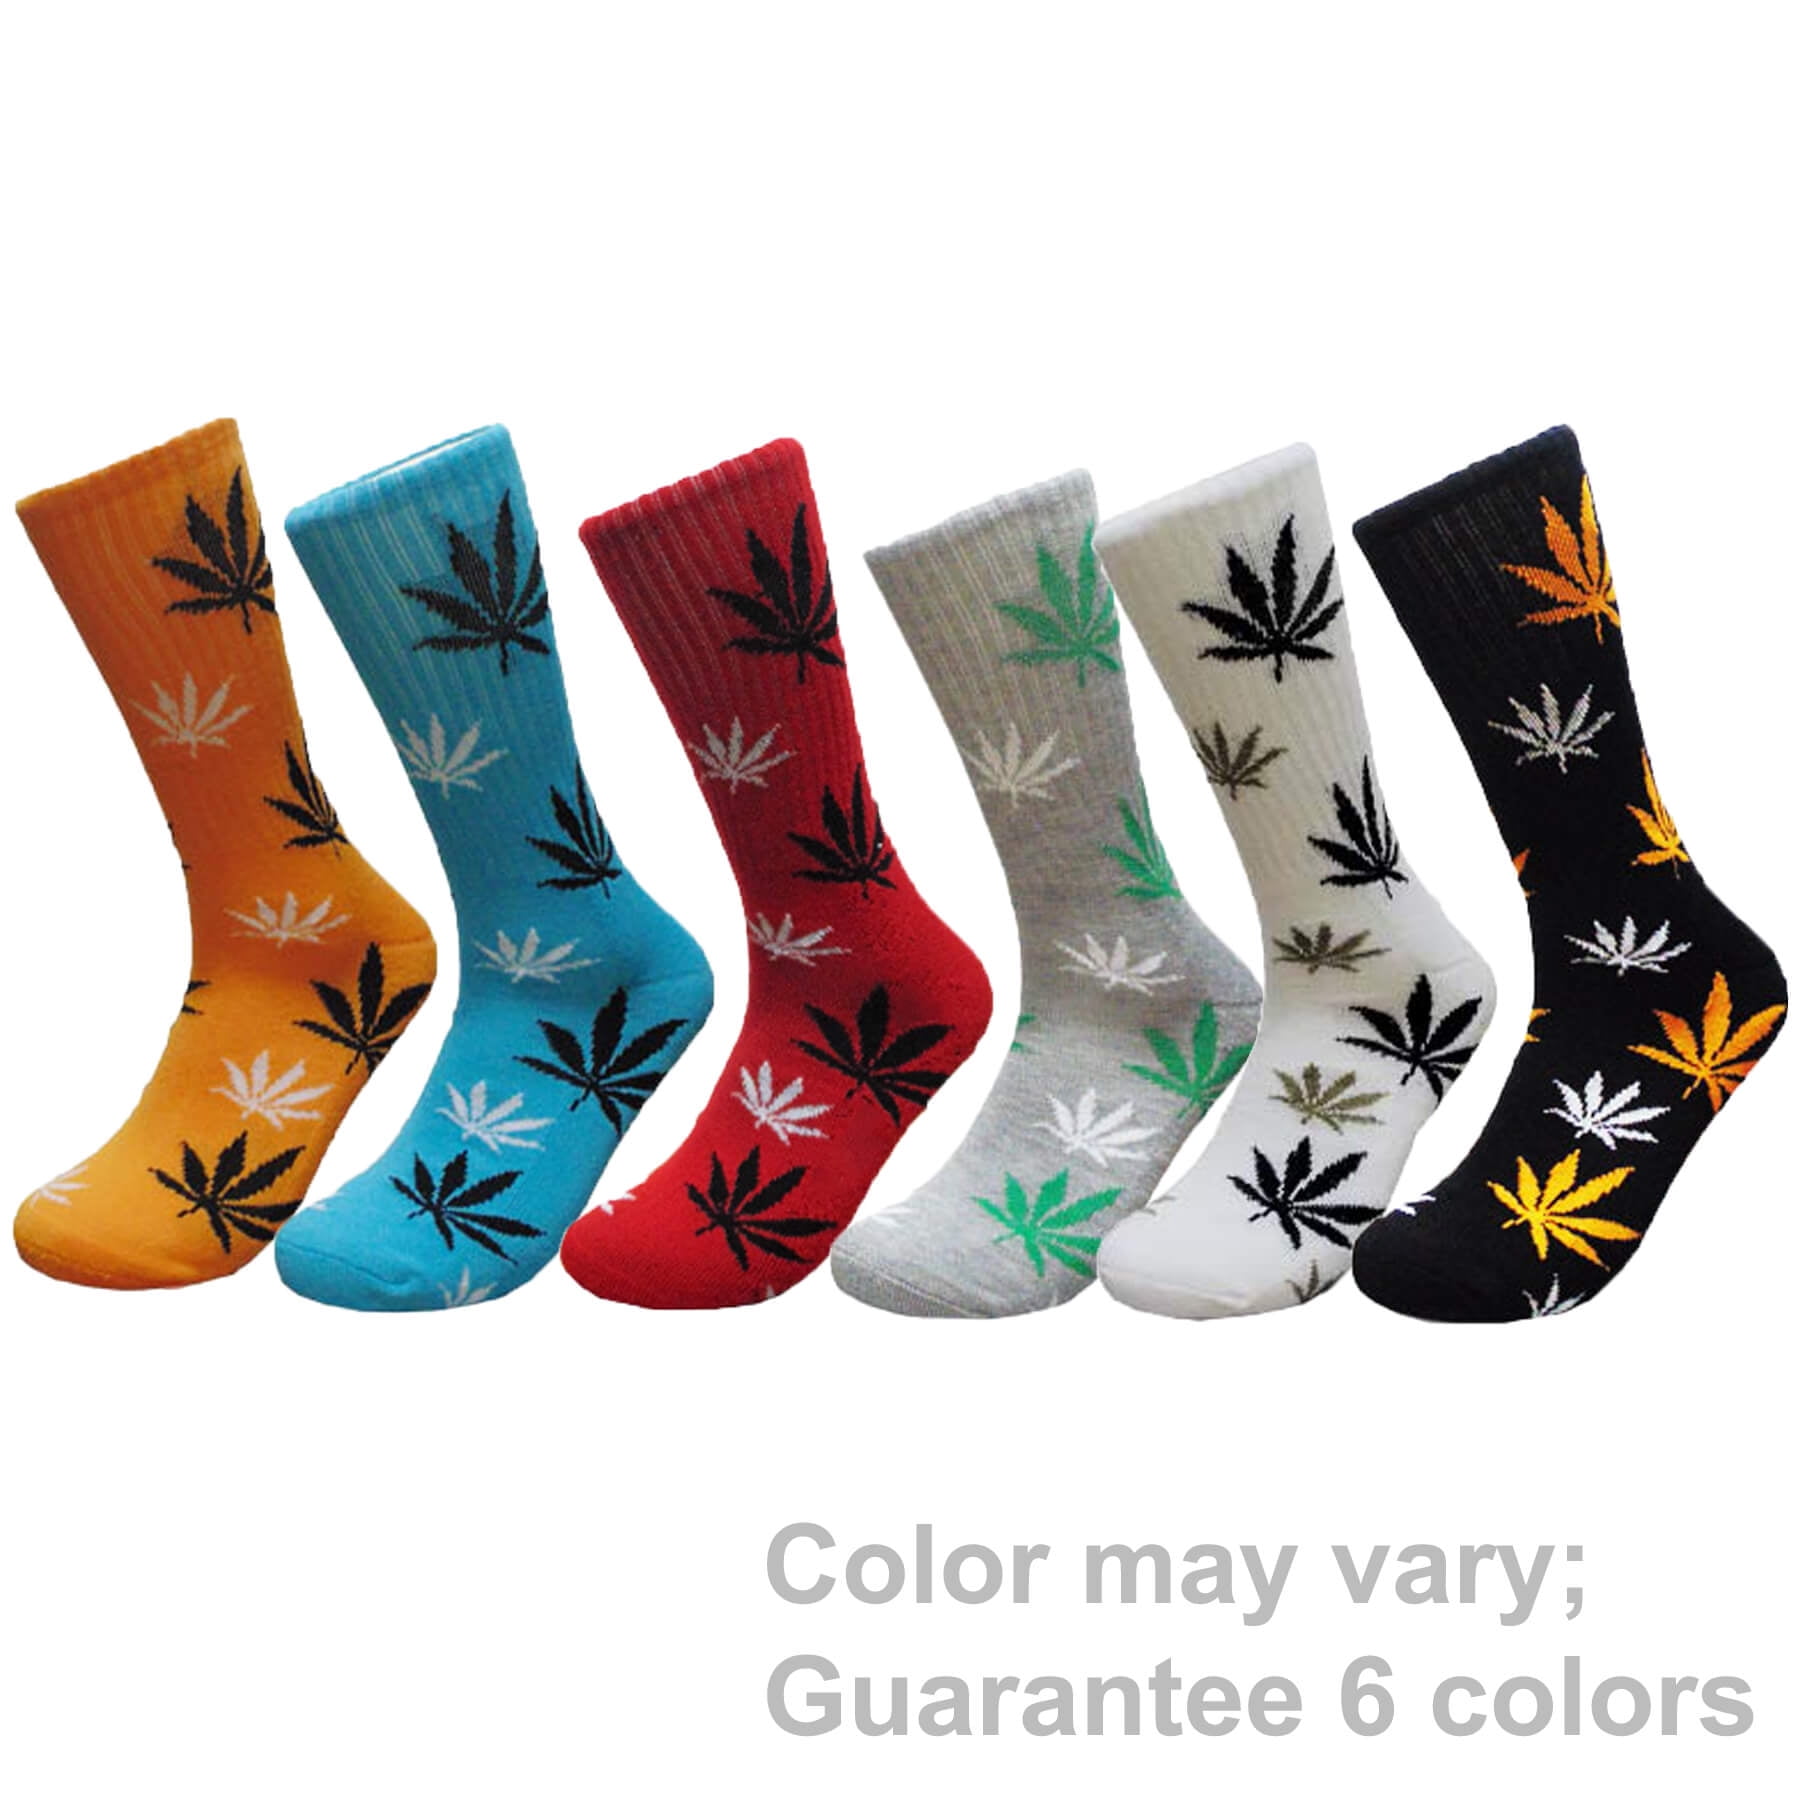 Details about   JOYCA & Co Unisex Ankle No Show Athletic Socks Casual Cotton Marijuana Leaf OS